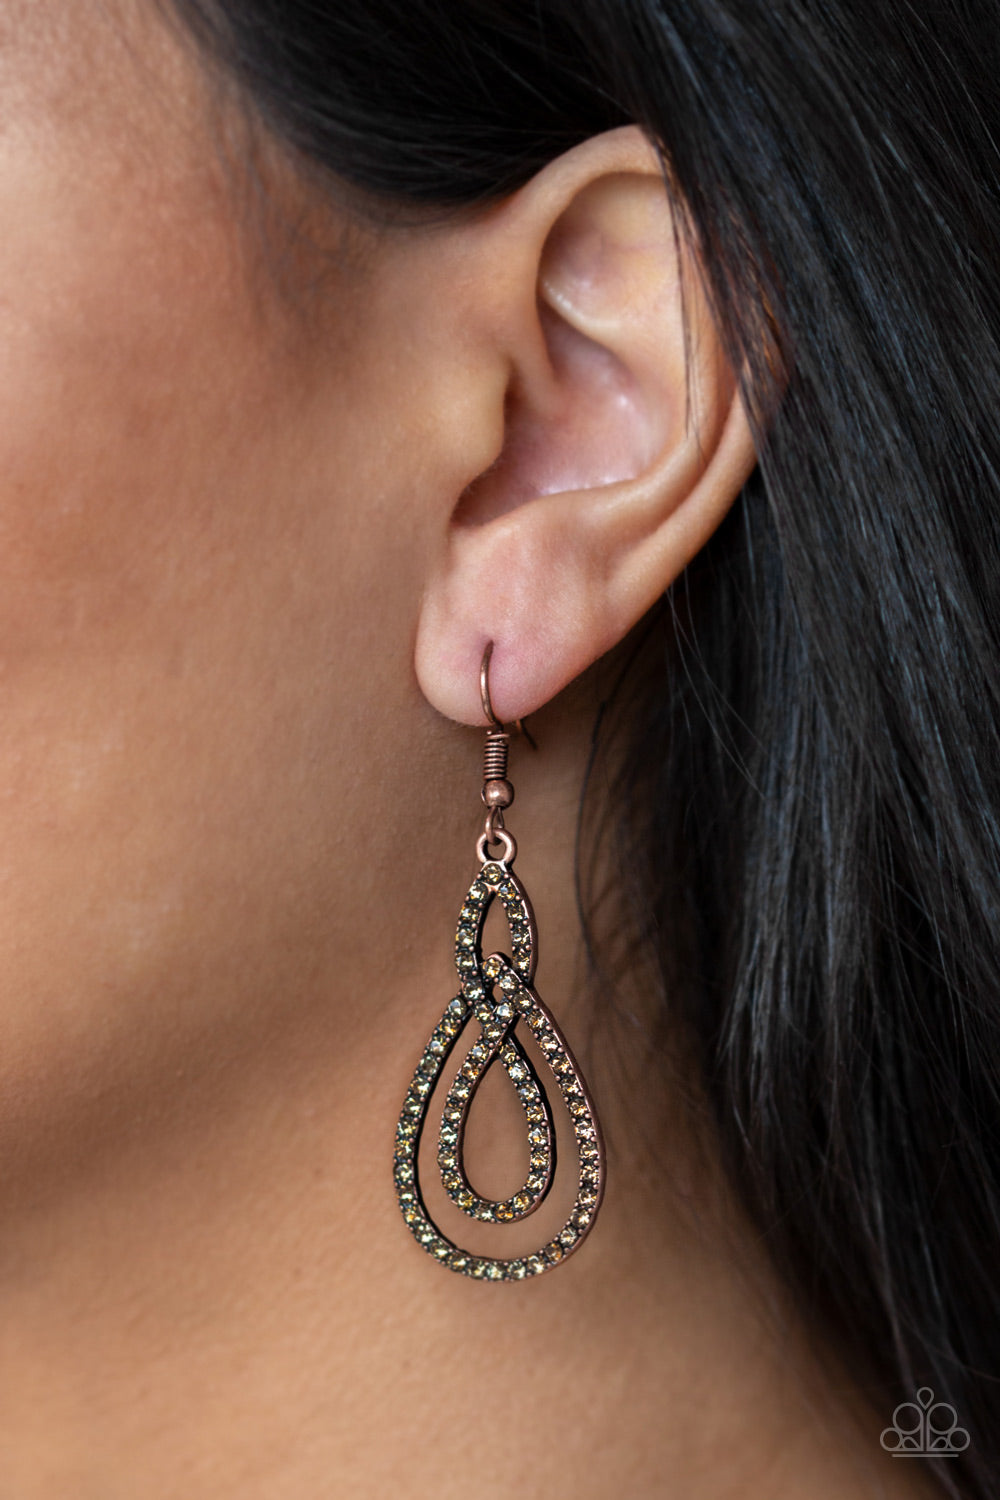 Paparazzi Sassy Sophistication - Copper - Topaz Rhinestones - Earrings - $5 Jewelry With Ashley Swint